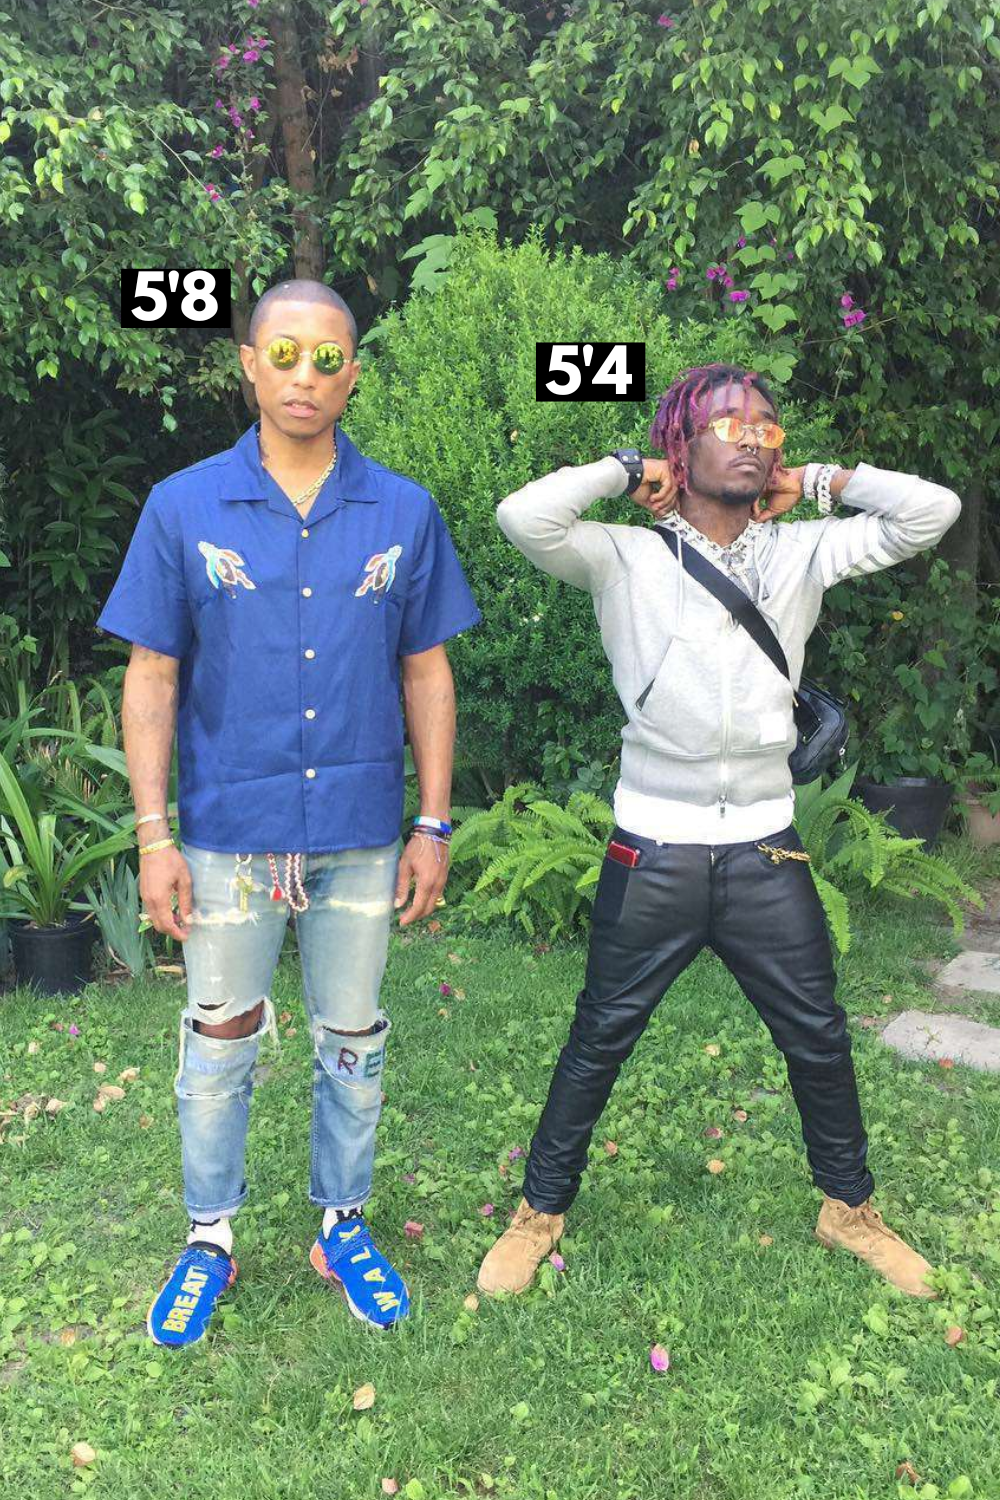 How Tall is Pharrell Williams